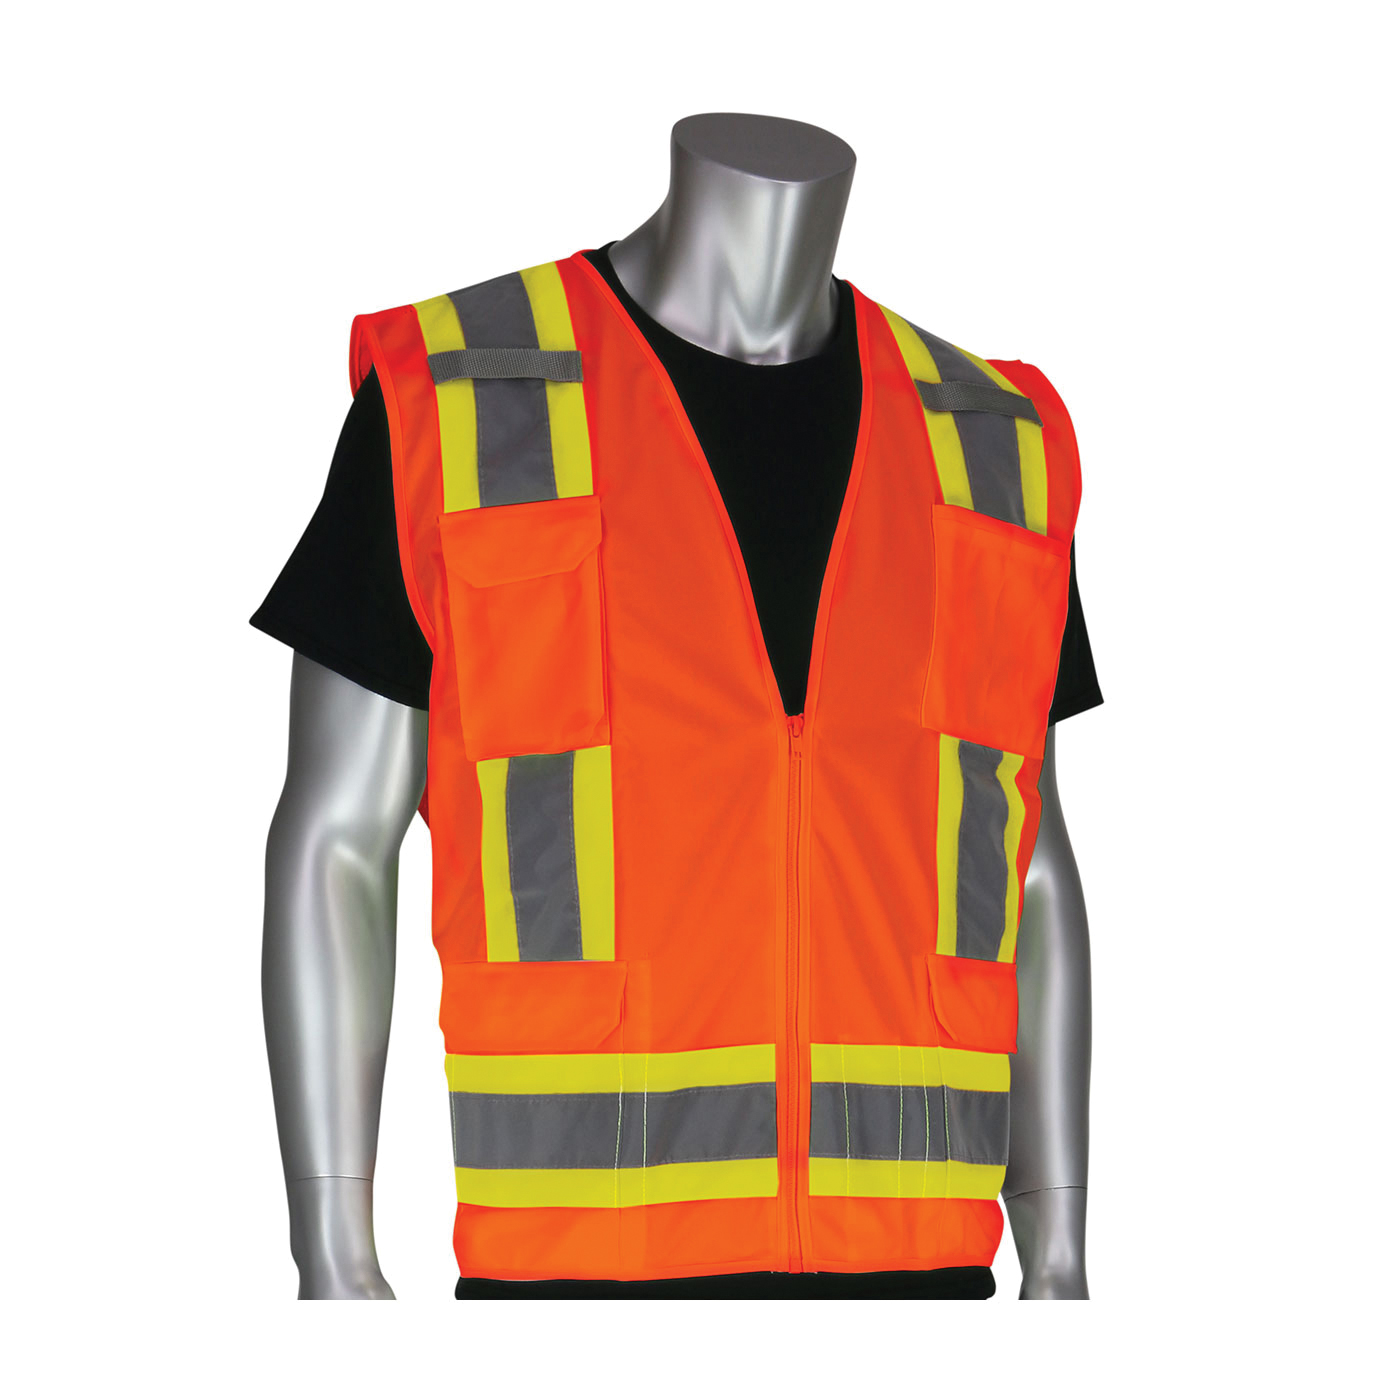 PIP® 302-0500-ORG/L 2-Tone Surveyor Safety Vest, L, Hi-Viz Orange, Polyester/Solid Tricot, Zipper Closure, 11 Pockets, ANSI Class: Class 2, Specifications Met: ANSI 107 Type R